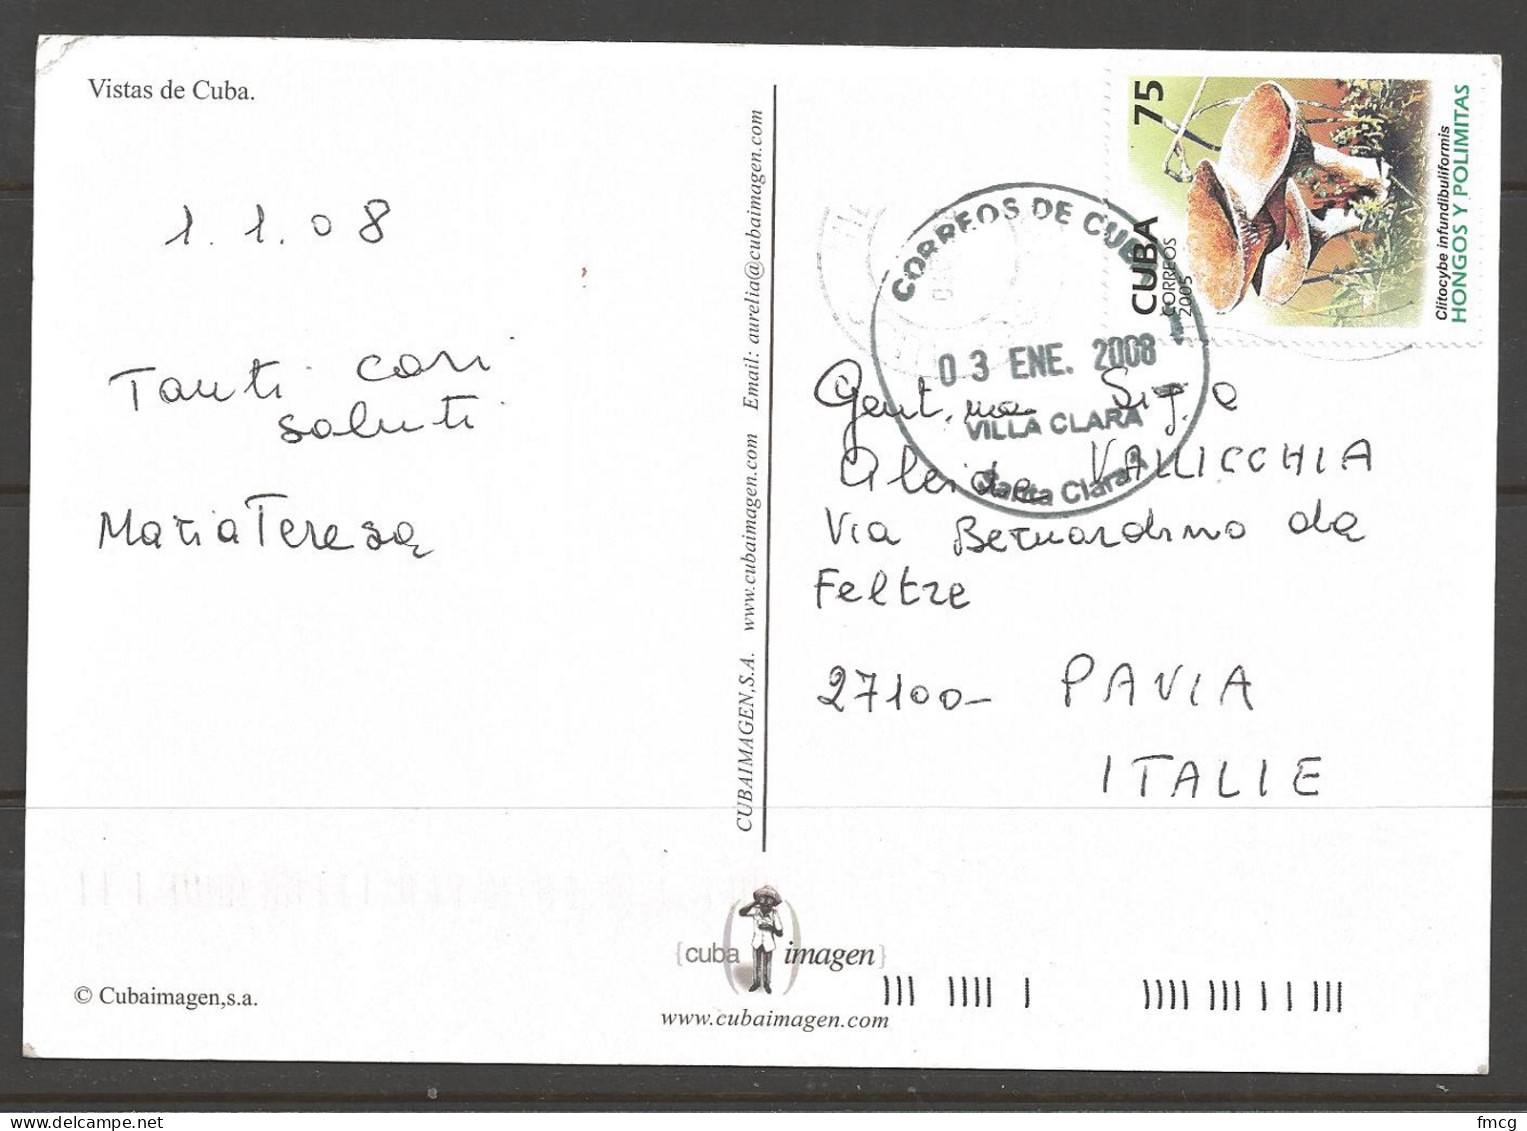 Postcard Mailed From Cuba To Pavia Italy 2008 03 ENE, Mushroom - 2001-10: Marcofilia